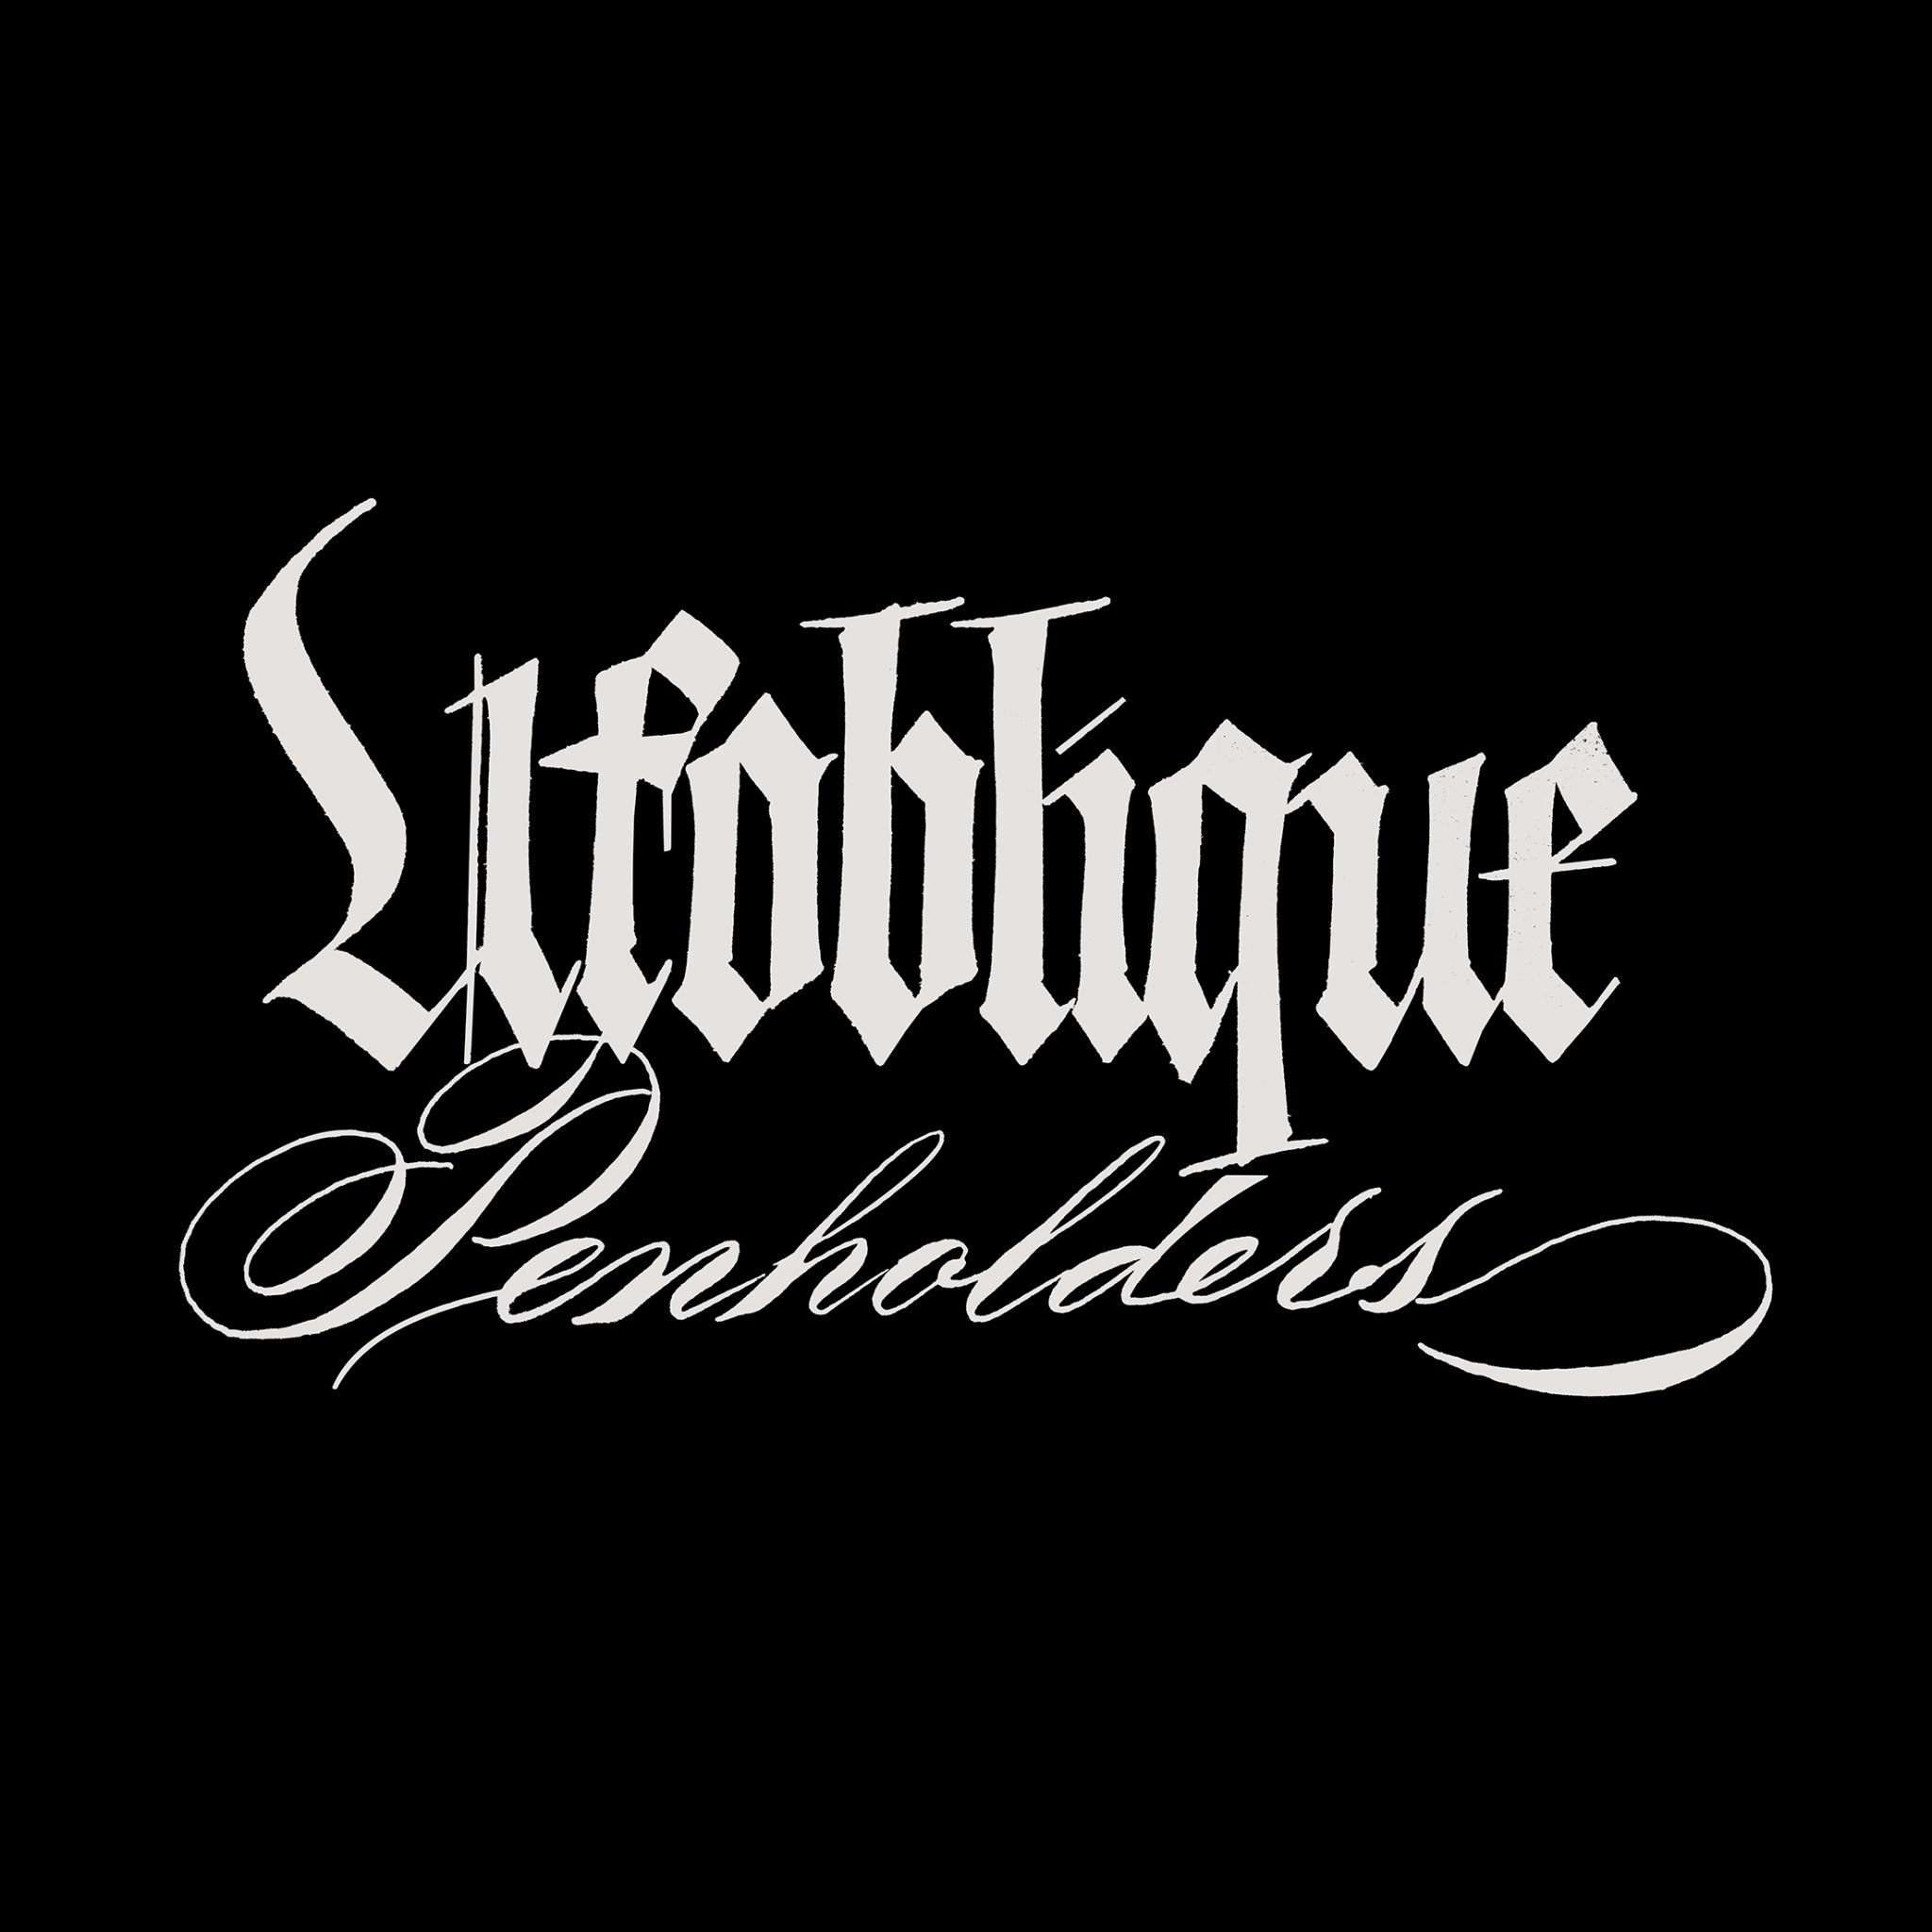 Ufoblique Penholders Cosmic oblique penholders for sale. Universal calligraphy tools. Worldwide. https://t.co/jjU8jHFKFl